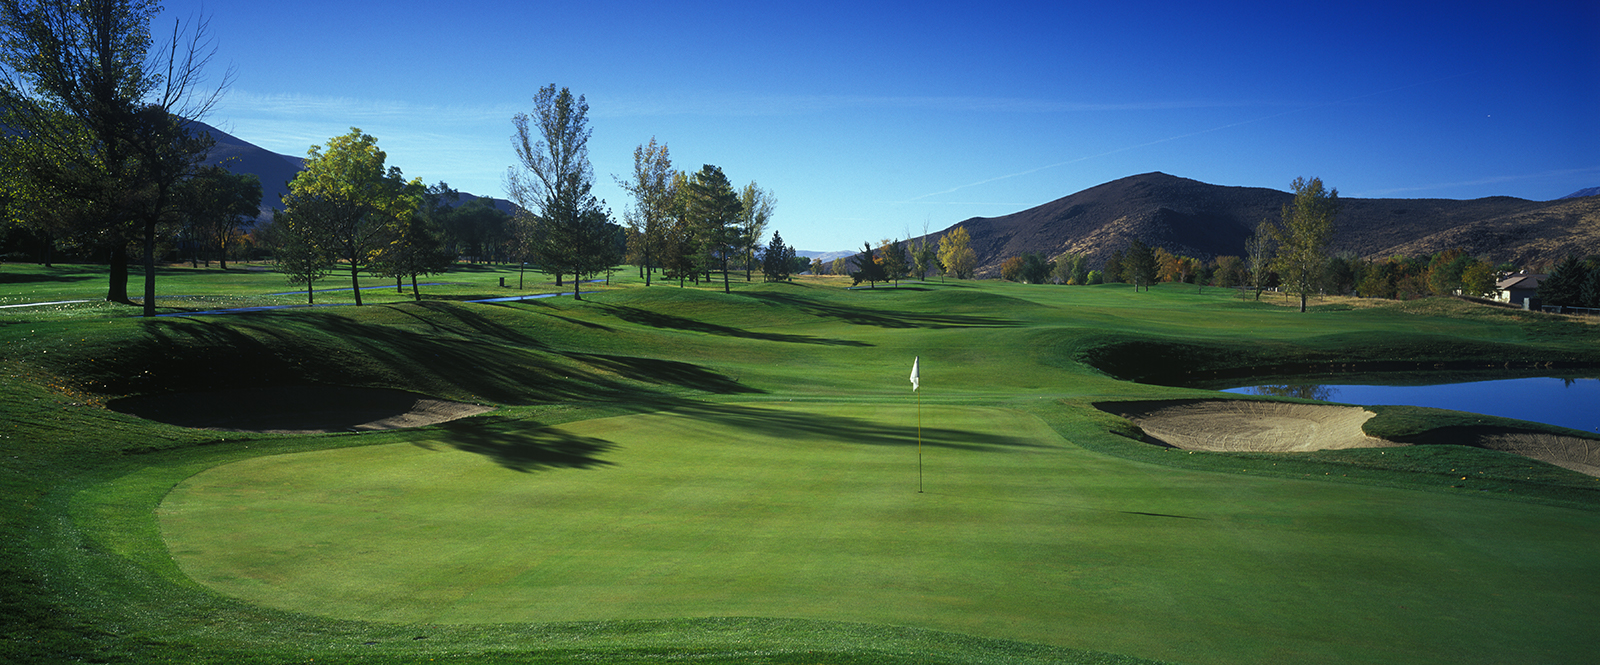 hidden valley golf course riverside ca